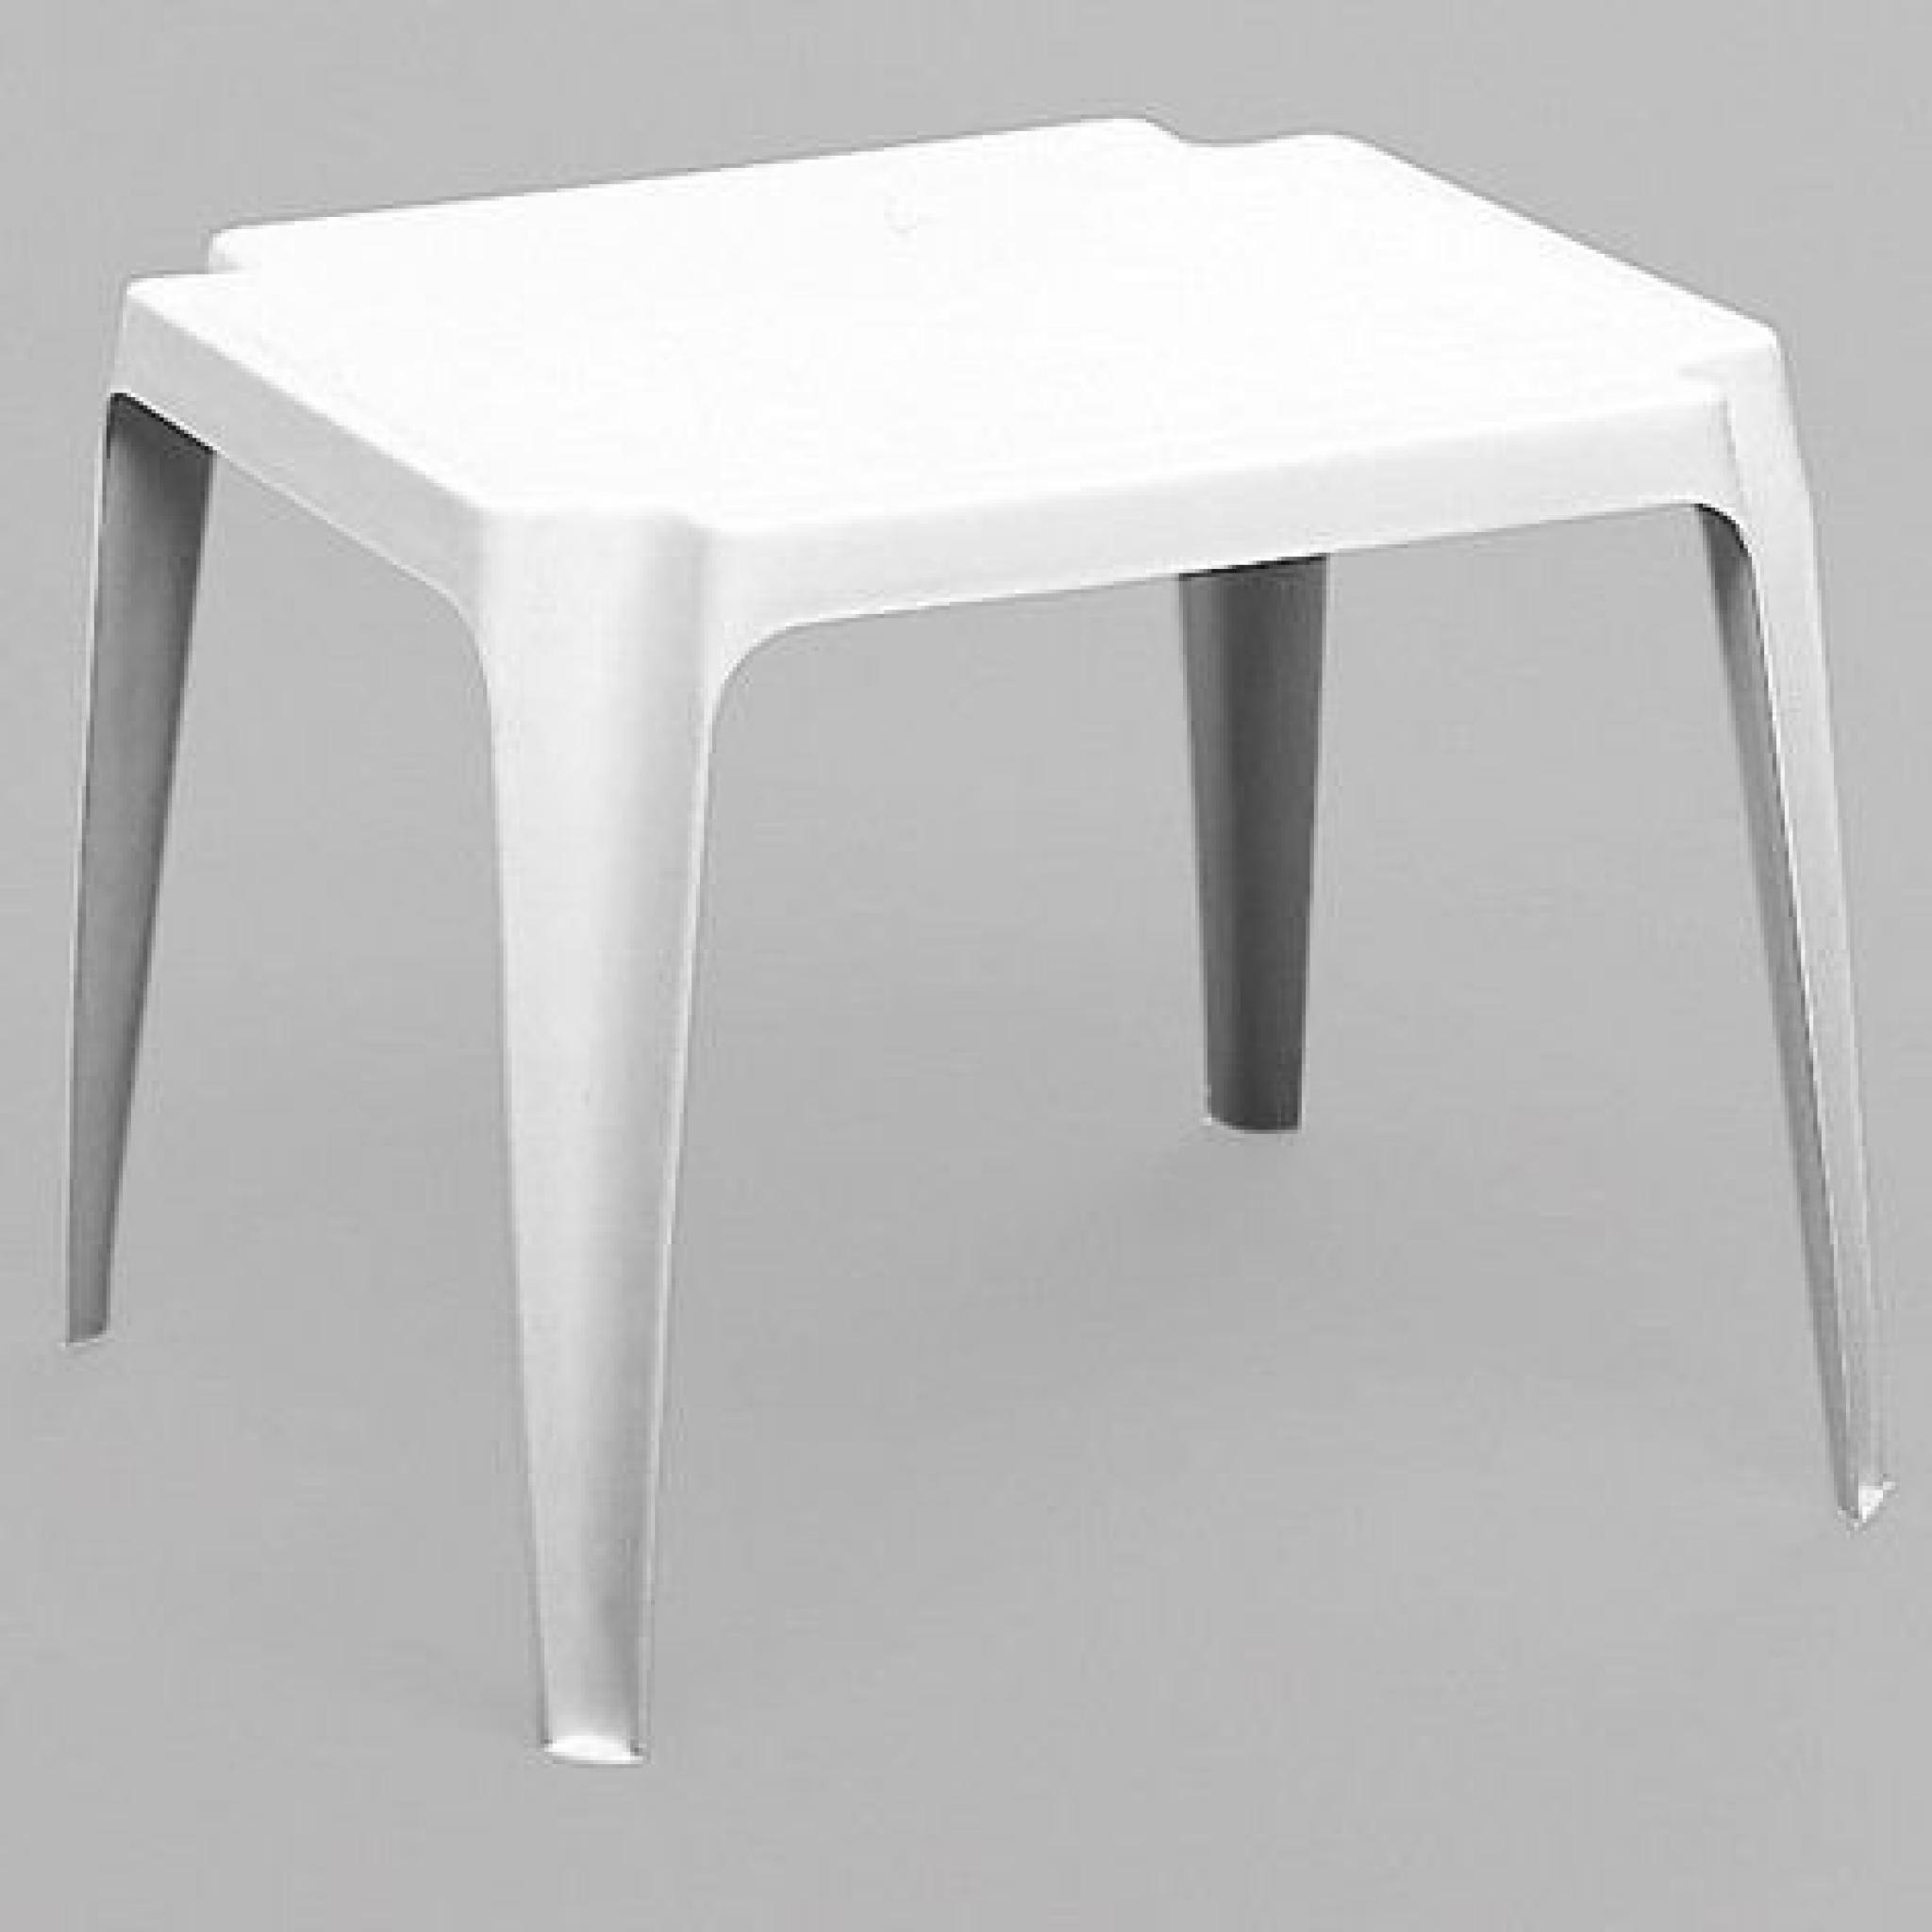 1 Table enfant (55x44x55cm)